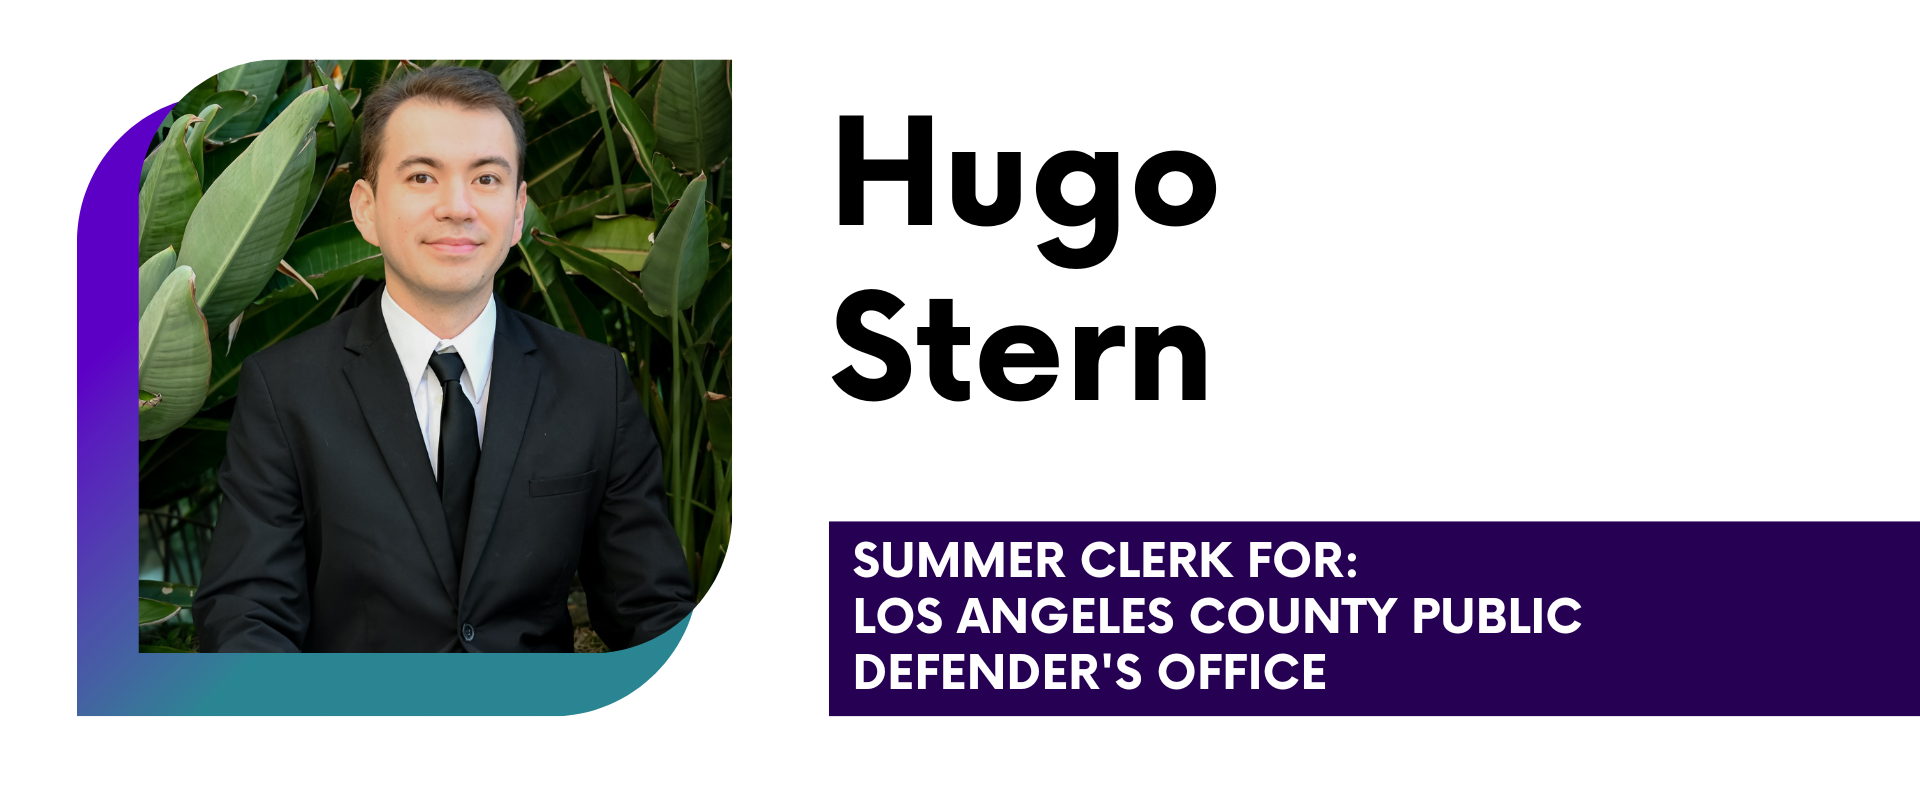 Hugo Stern Summer Clerk for: Los Angeles County Public Defender's Office